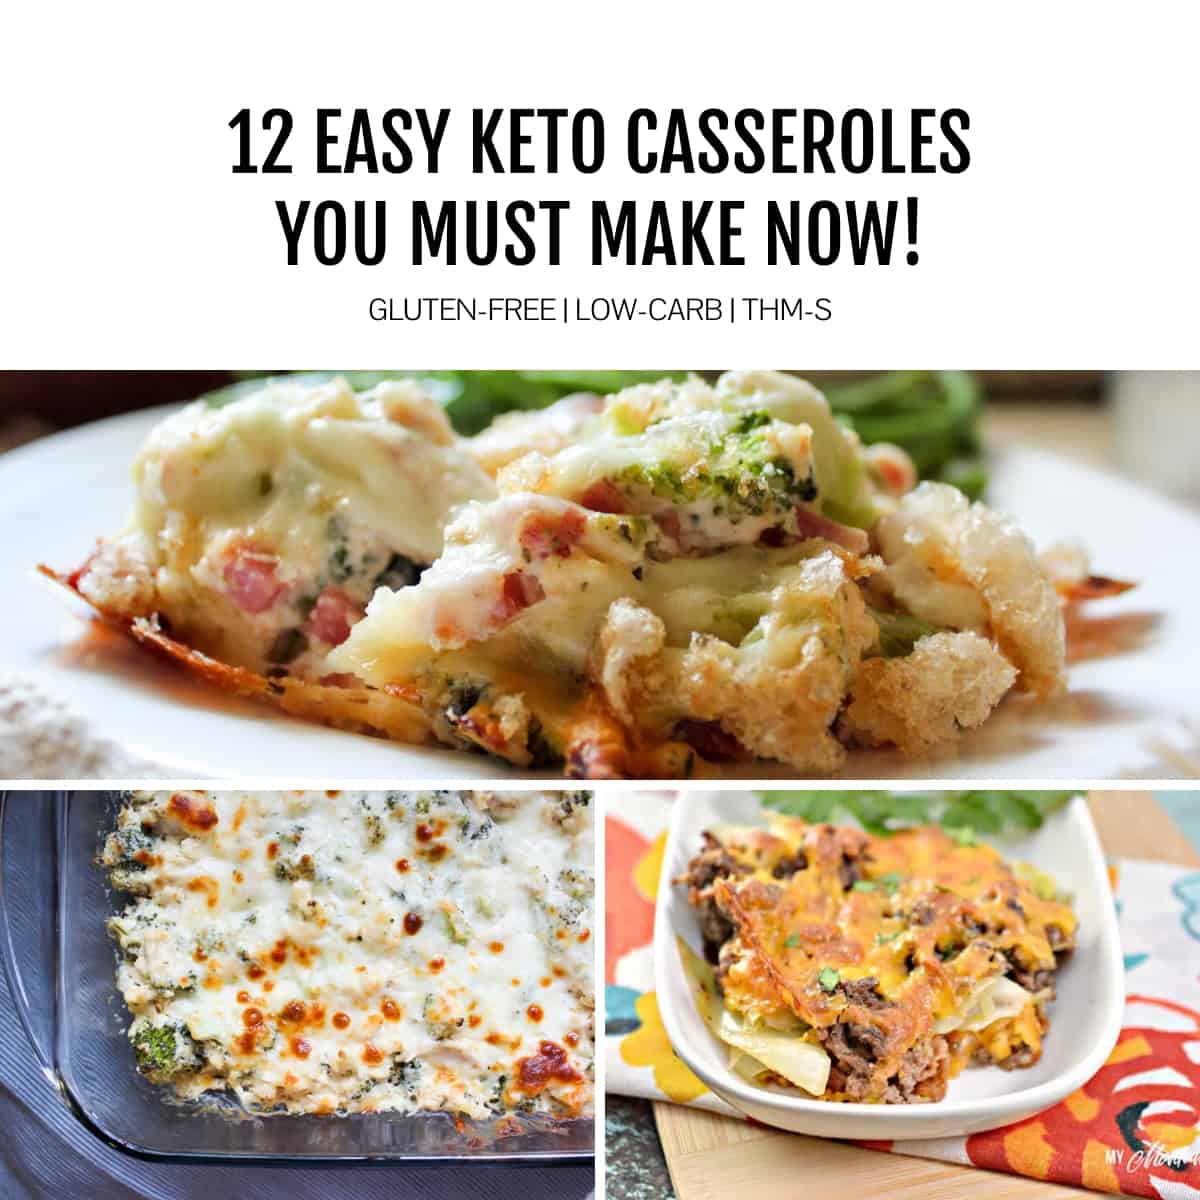 12 Easy Keto Casseroles You Need to Make Now! | My Montana Kitchen